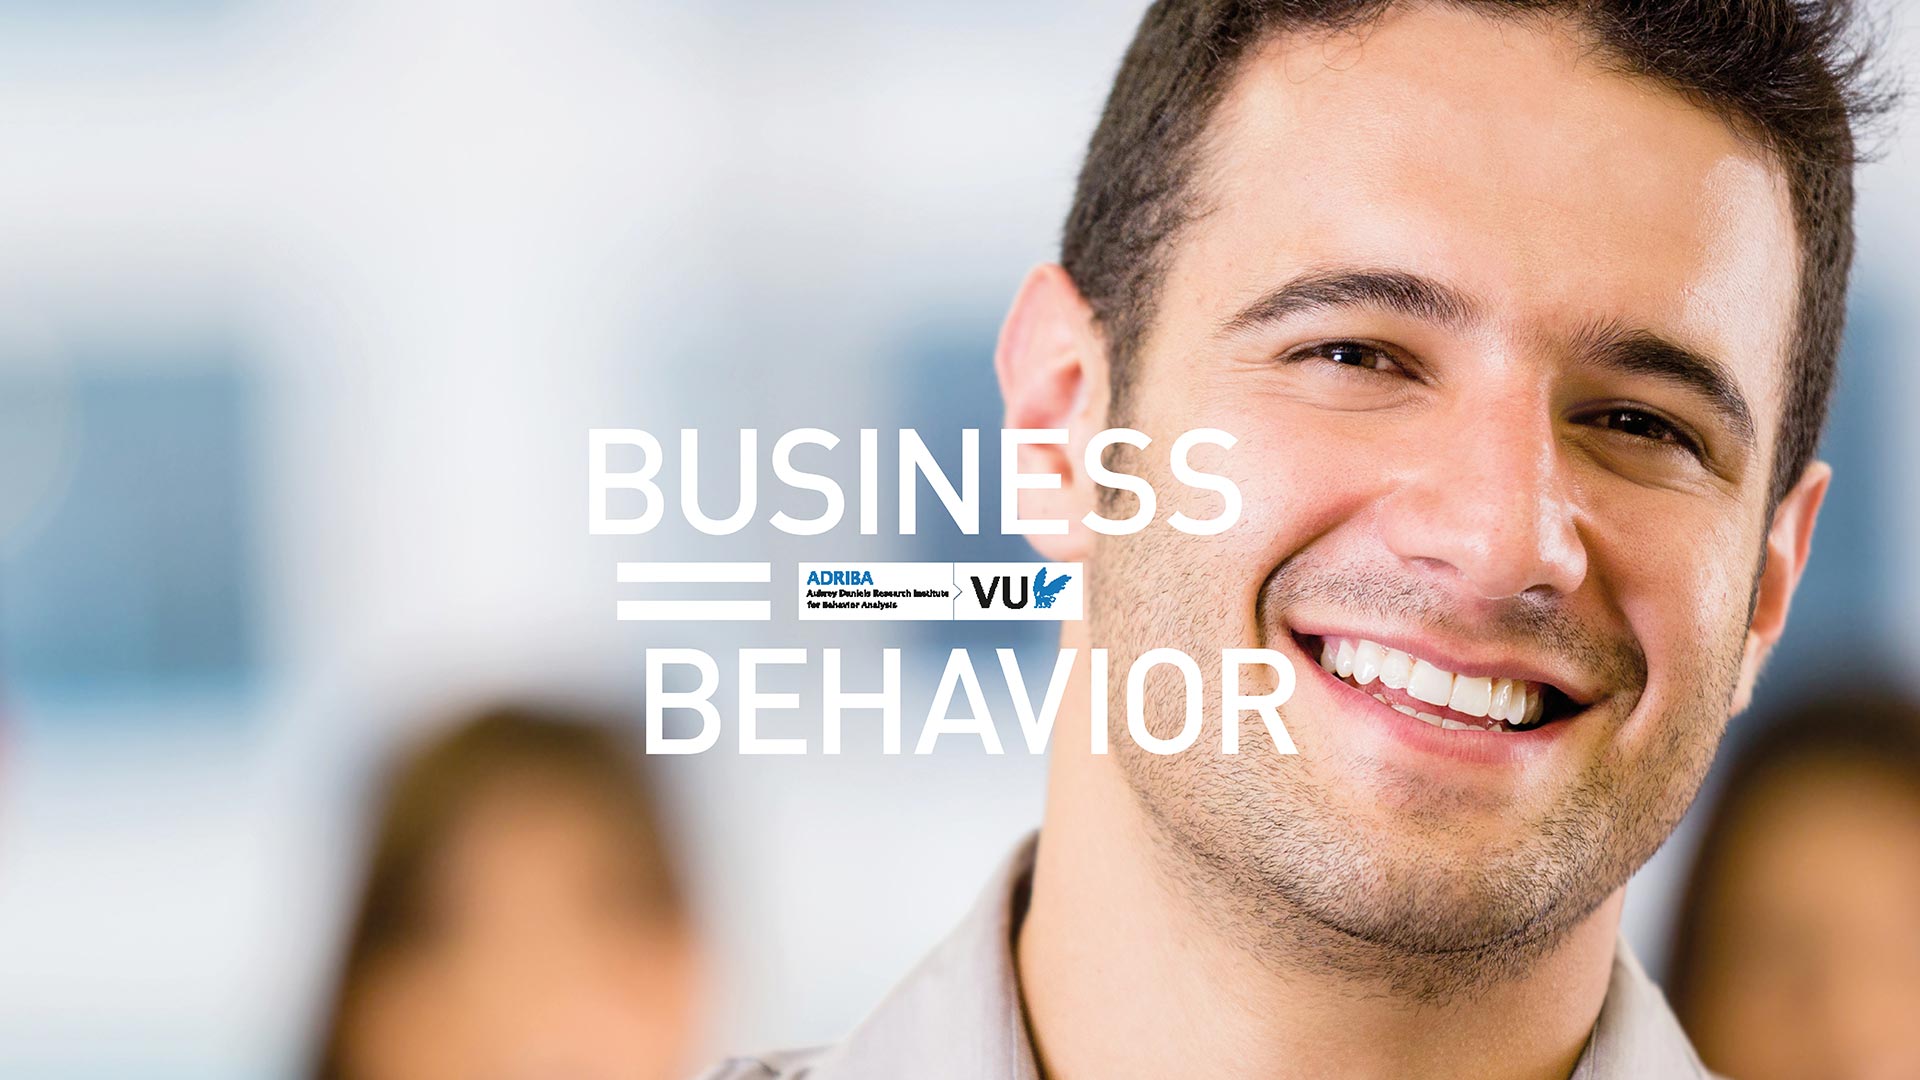 Business = Behavior